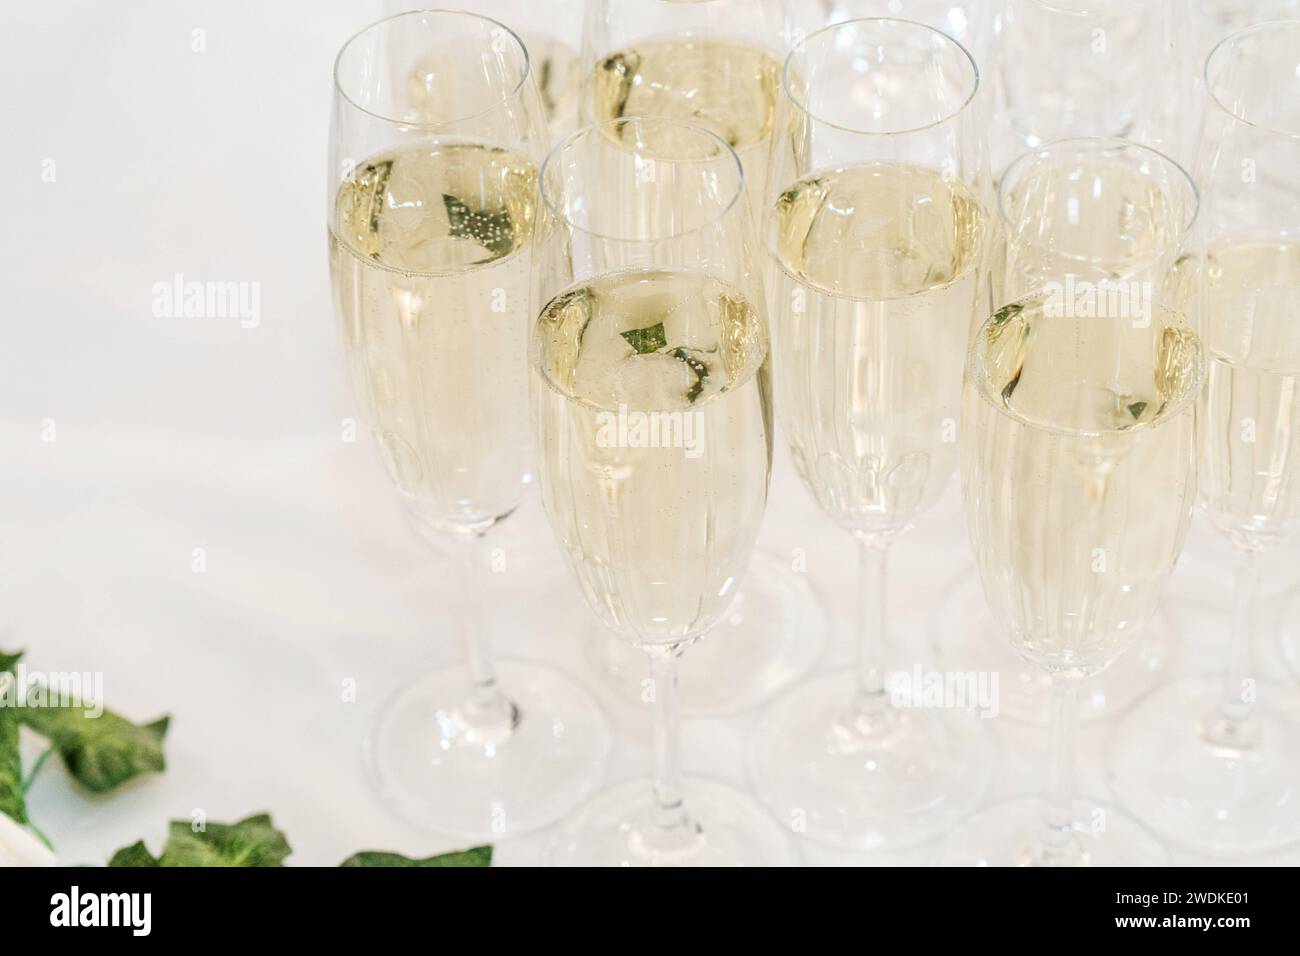 Augsbourg, Bavière, Allemagne 19 janvier 2024 : verres à champagne remplis de vin mousseux sur une nappe blanche lors d'un événement *** Sektgläser BEI einer Veranstaltung gefüllt mit Sekt auf Weißer Tischdecke Banque D'Images